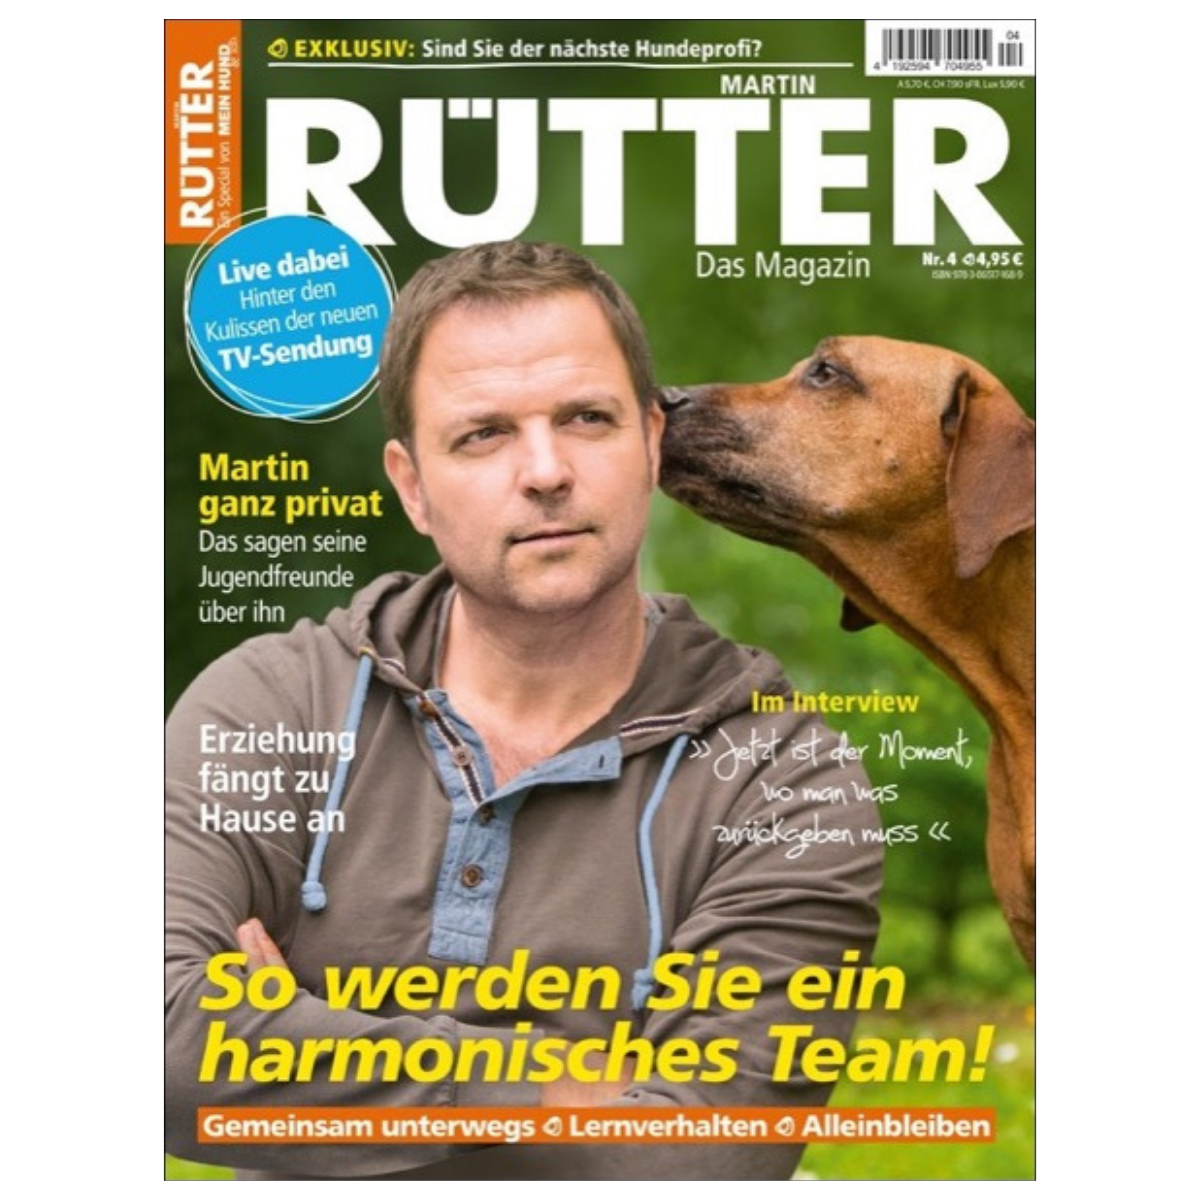 Martin Rütter - Das Magazin - Digitale Ausgabe 4/2020